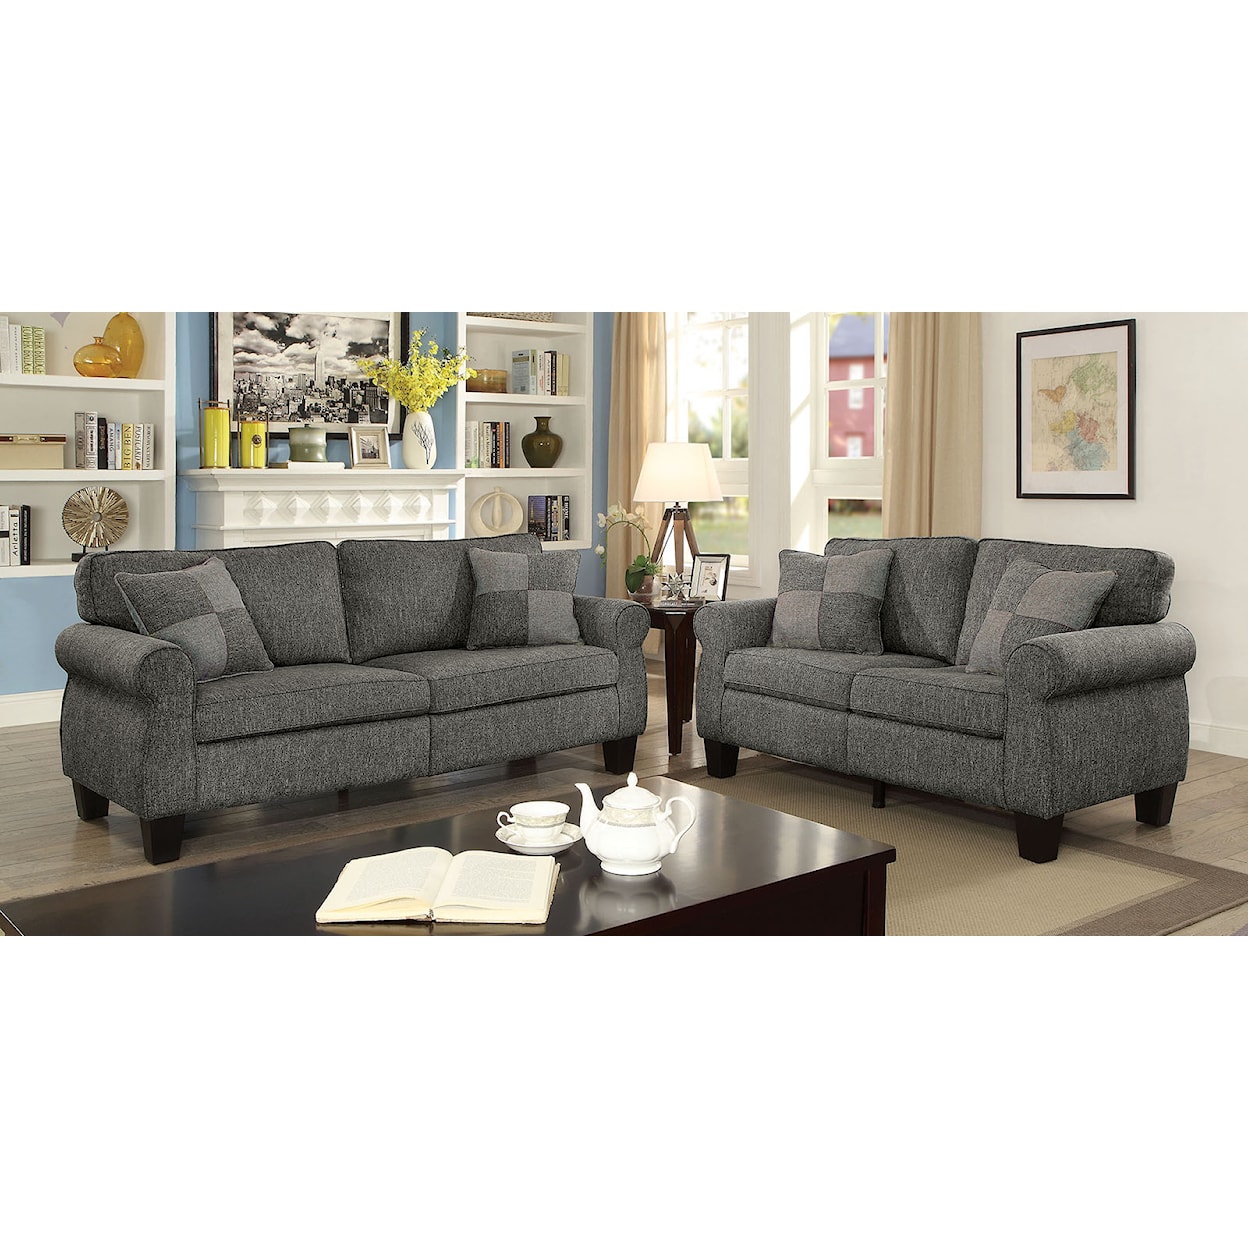 Furniture of America Rhian Sofa and Loveseat Set